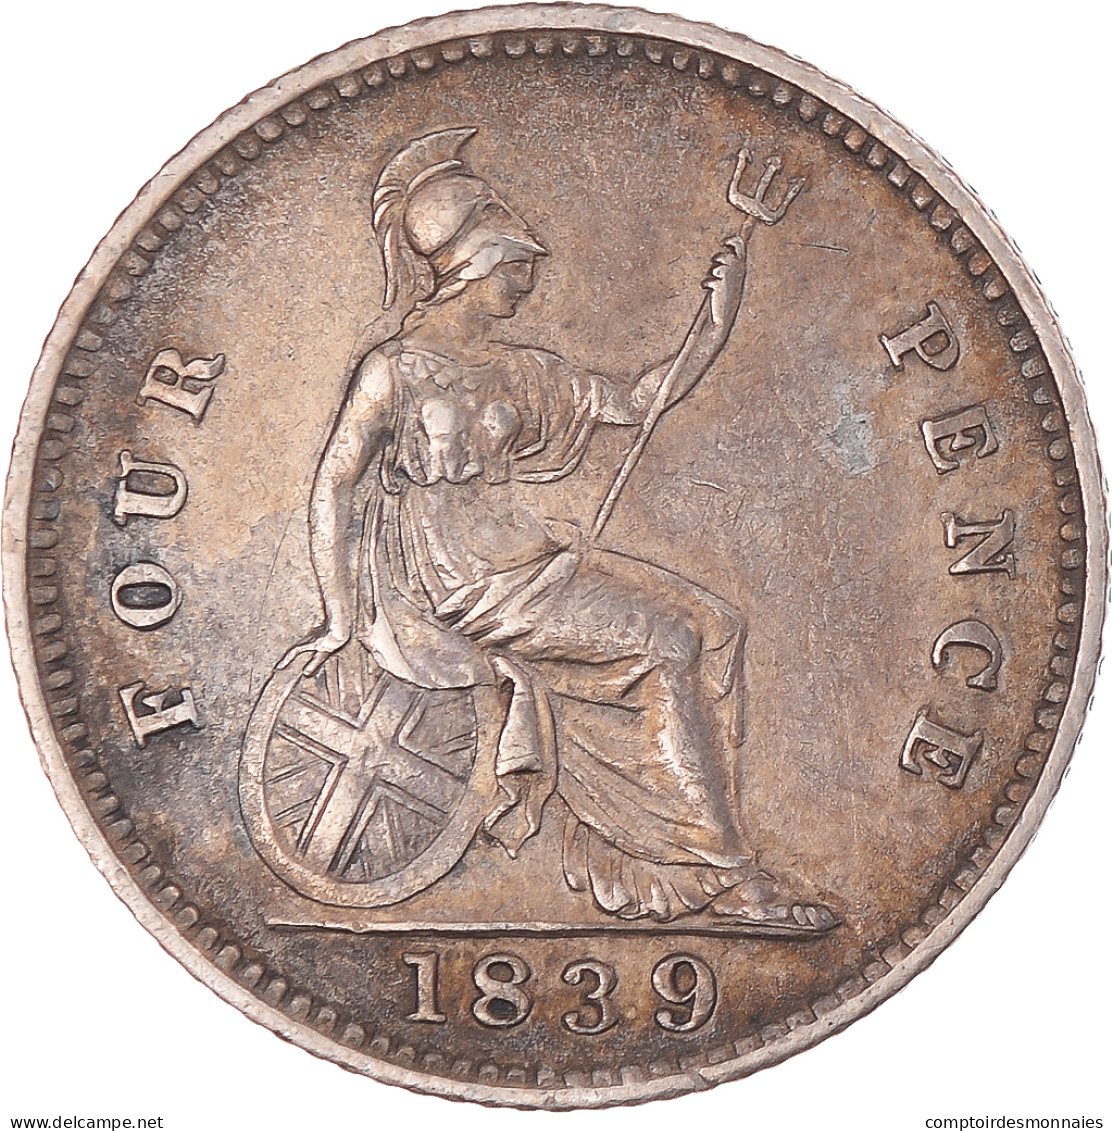 Monnaie, Grande-Bretagne, Victoria, 4 Pence, Groat, 1839, Londres, SUP, Argent - G. 4 Pence/ Groat